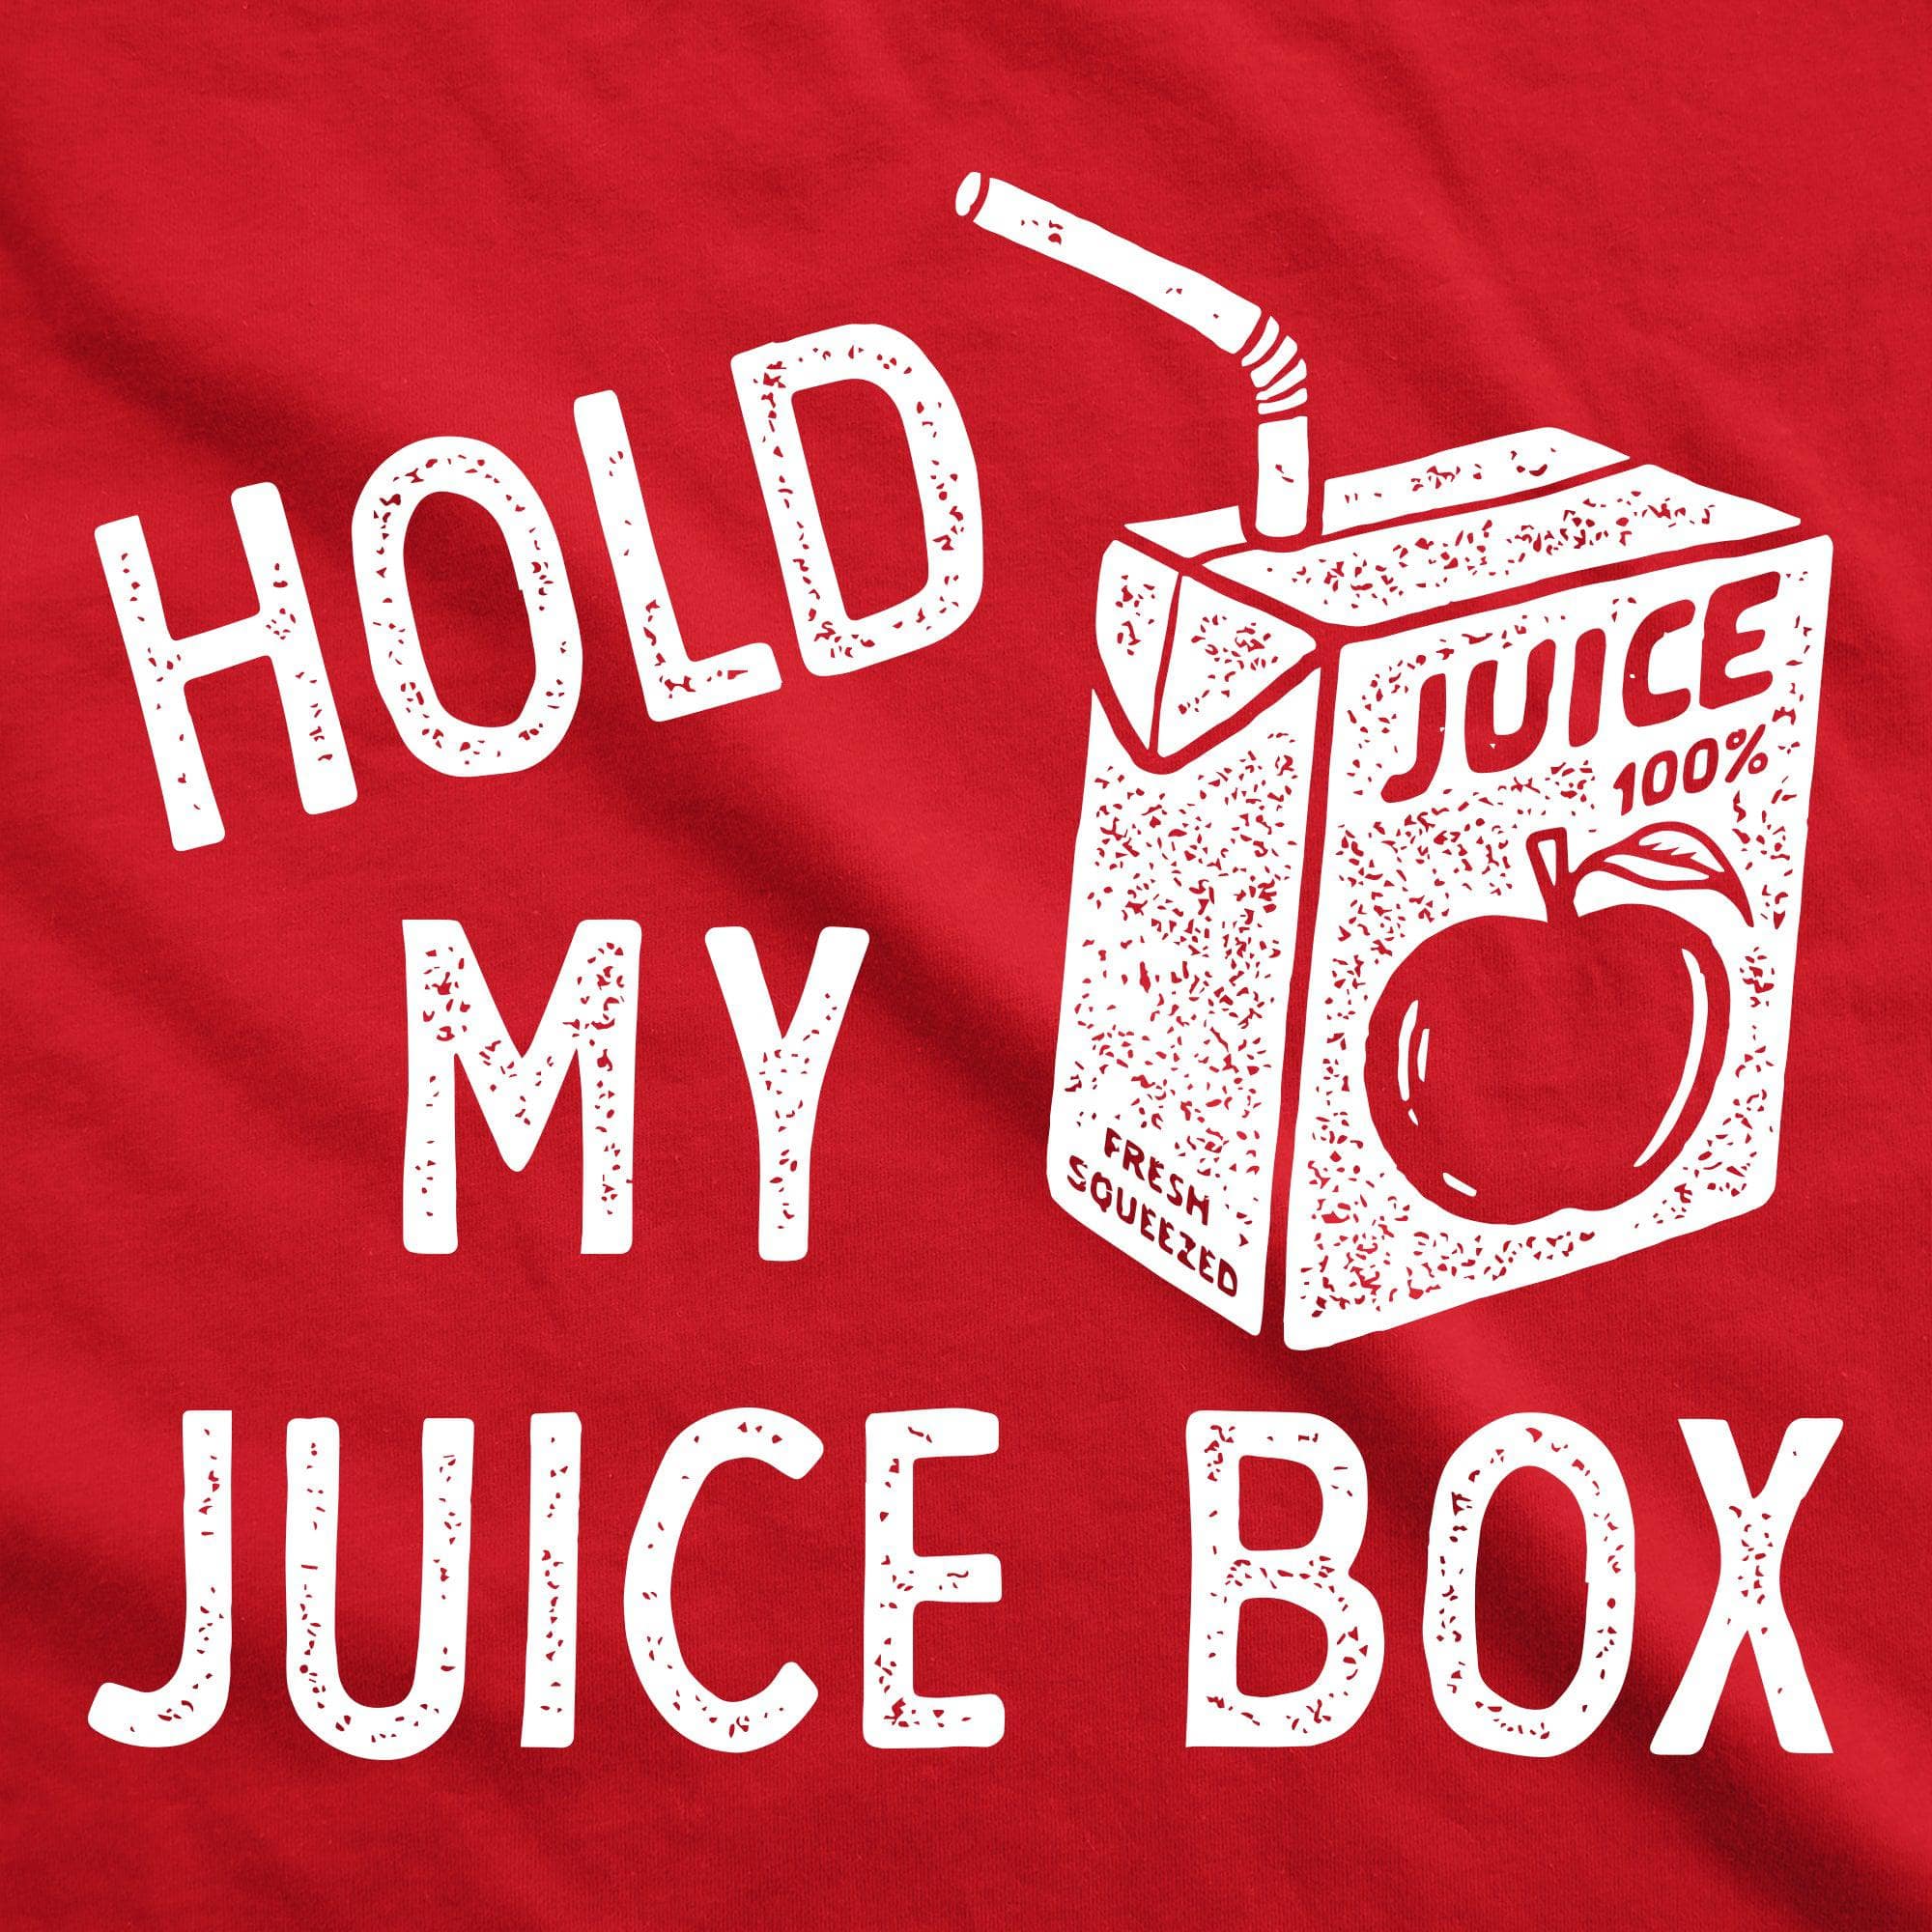 Hold My Juice Box Baby Bodysuit  -  Crazy Dog T-Shirts